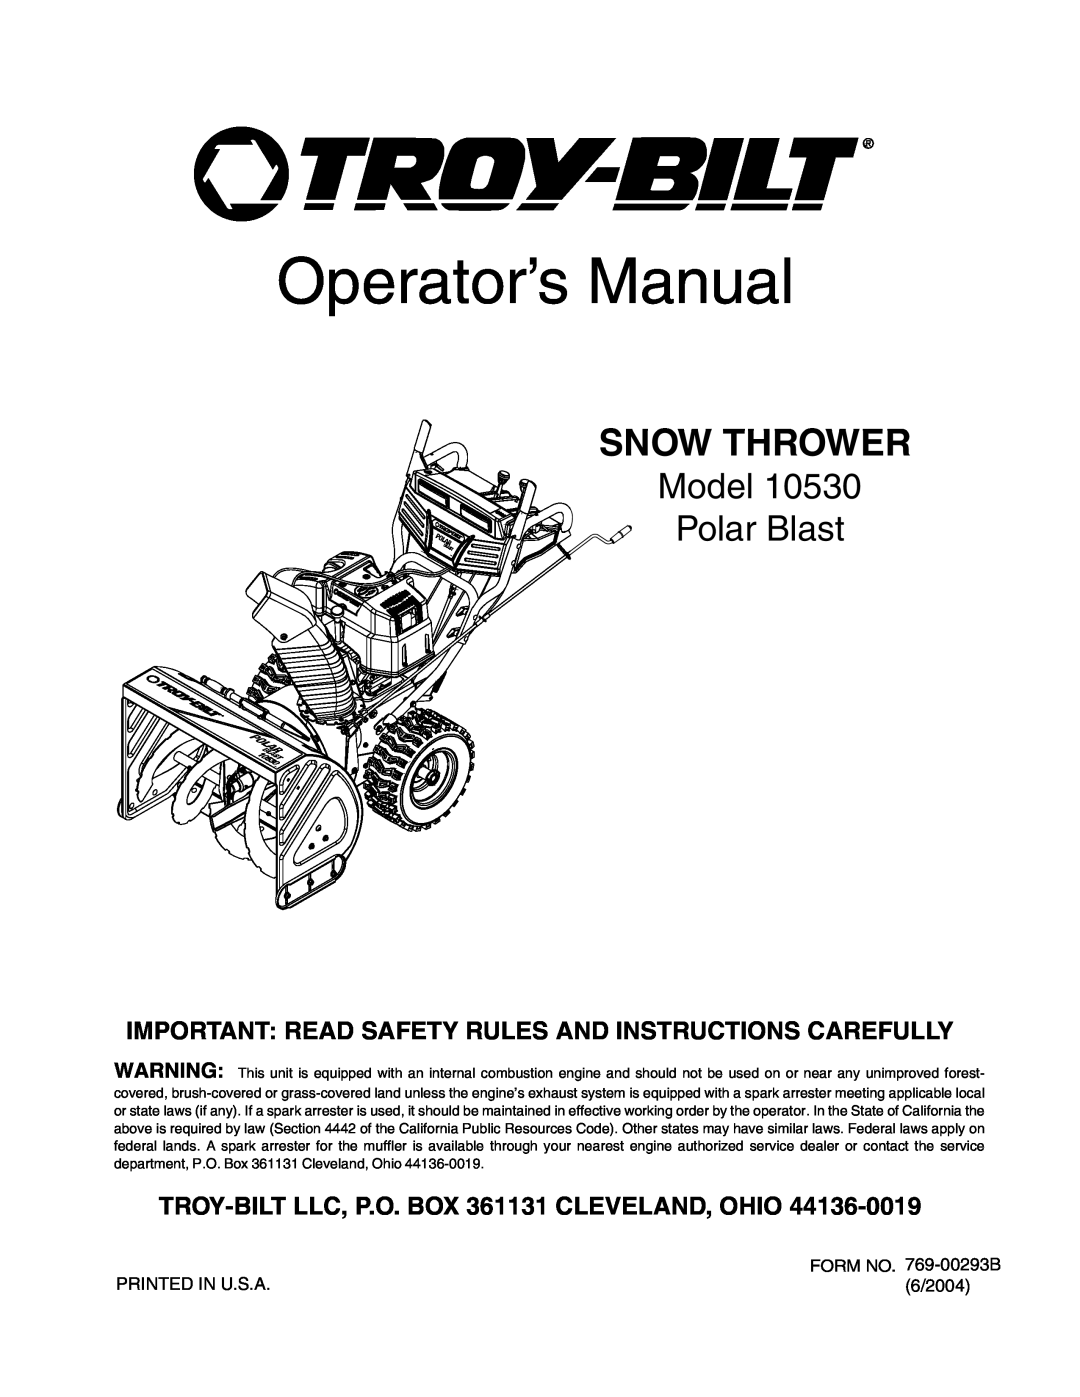 Troy-Bilt 10530 manual Operator’s Manual, Snow Thrower, Model Polar Blast, TROY-BILT LLC, P.O. BOX 361131 CLEVELAND, OHIO 